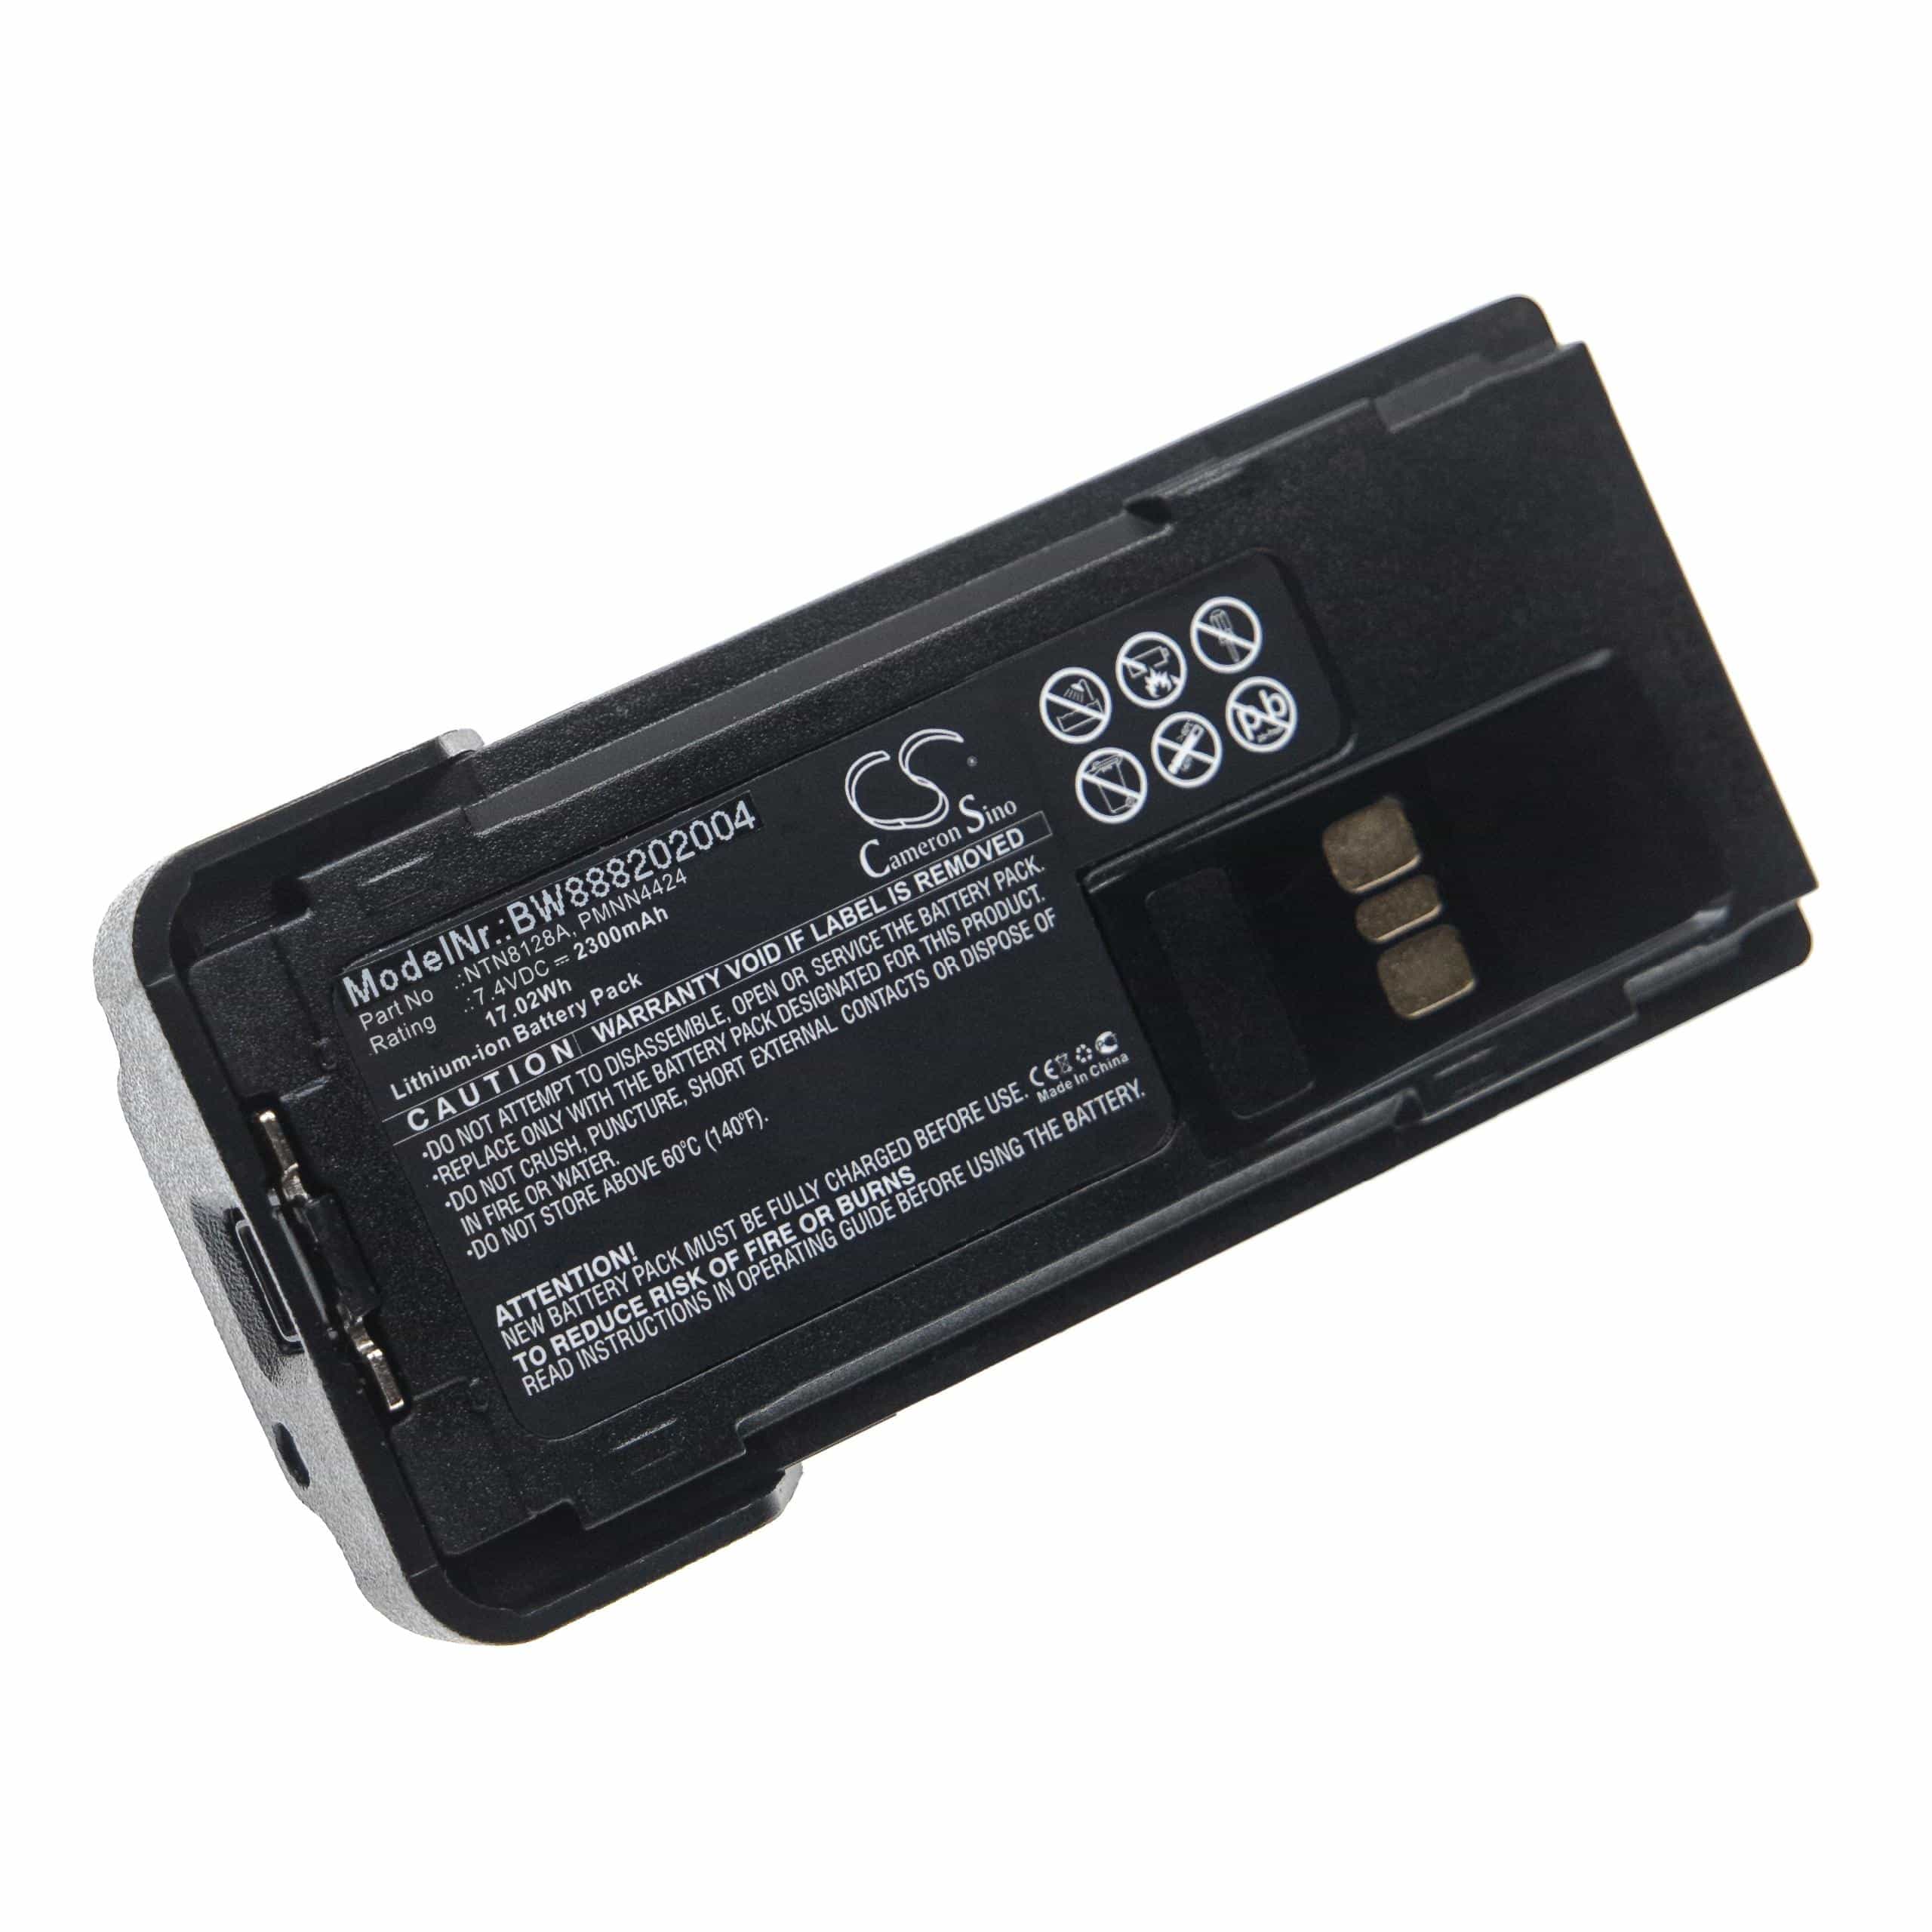 Batterie remplace Motorola NTN8128A, NNTN8129AR, NNTN8128A pour radio talkie-walkie - 2300mAh 7,4V Li-ion